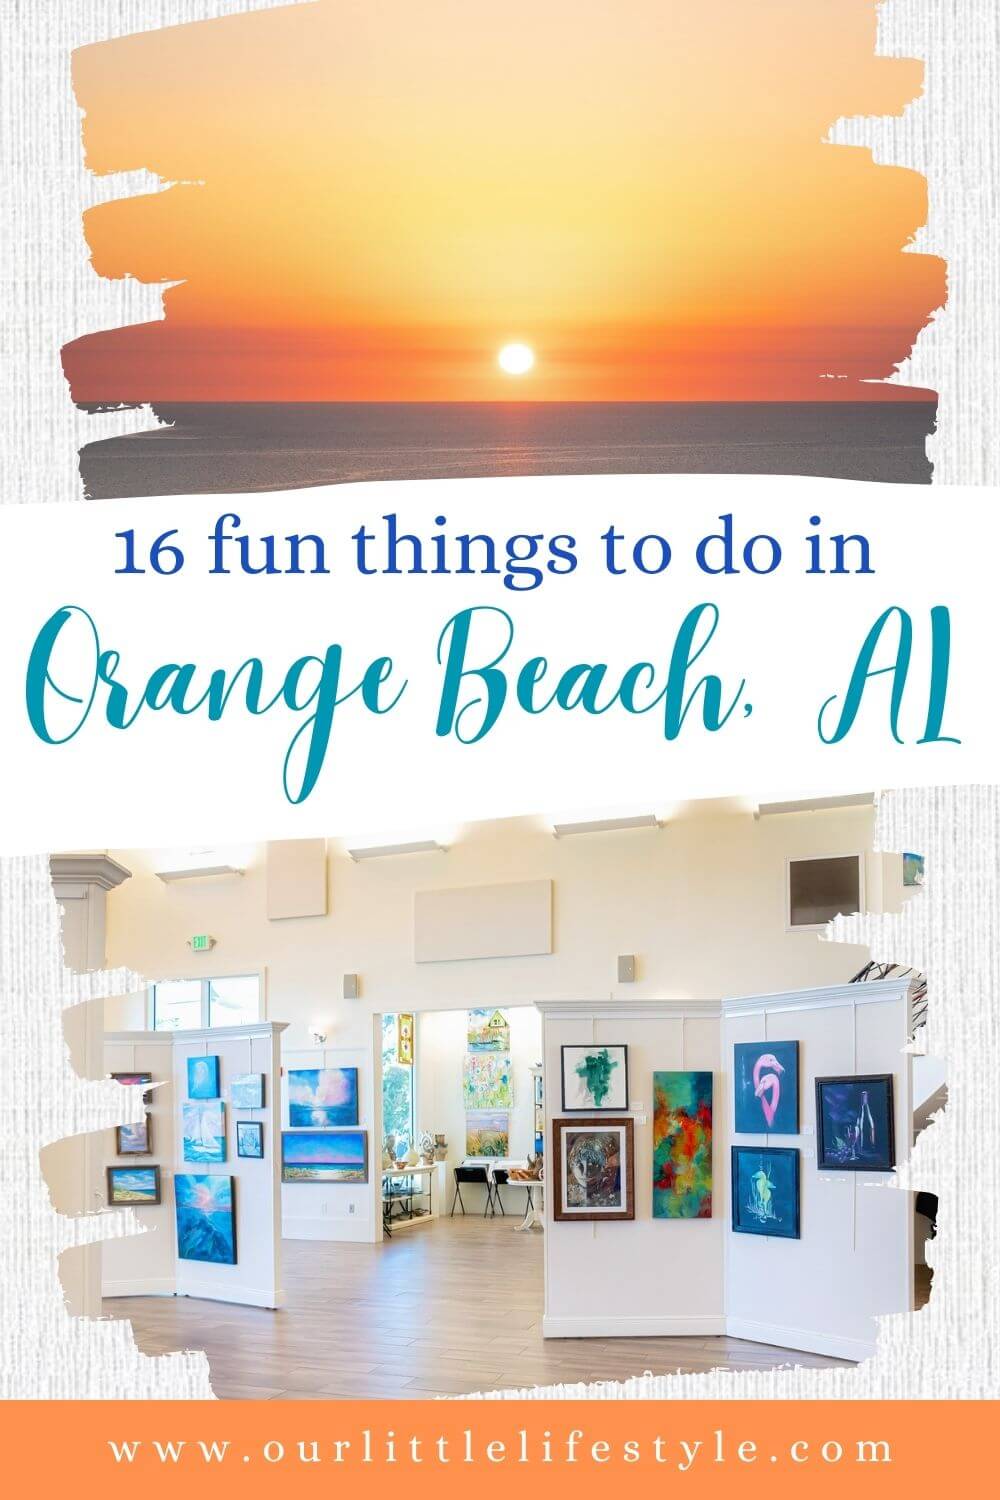 Things to Do in Orange Beach AL